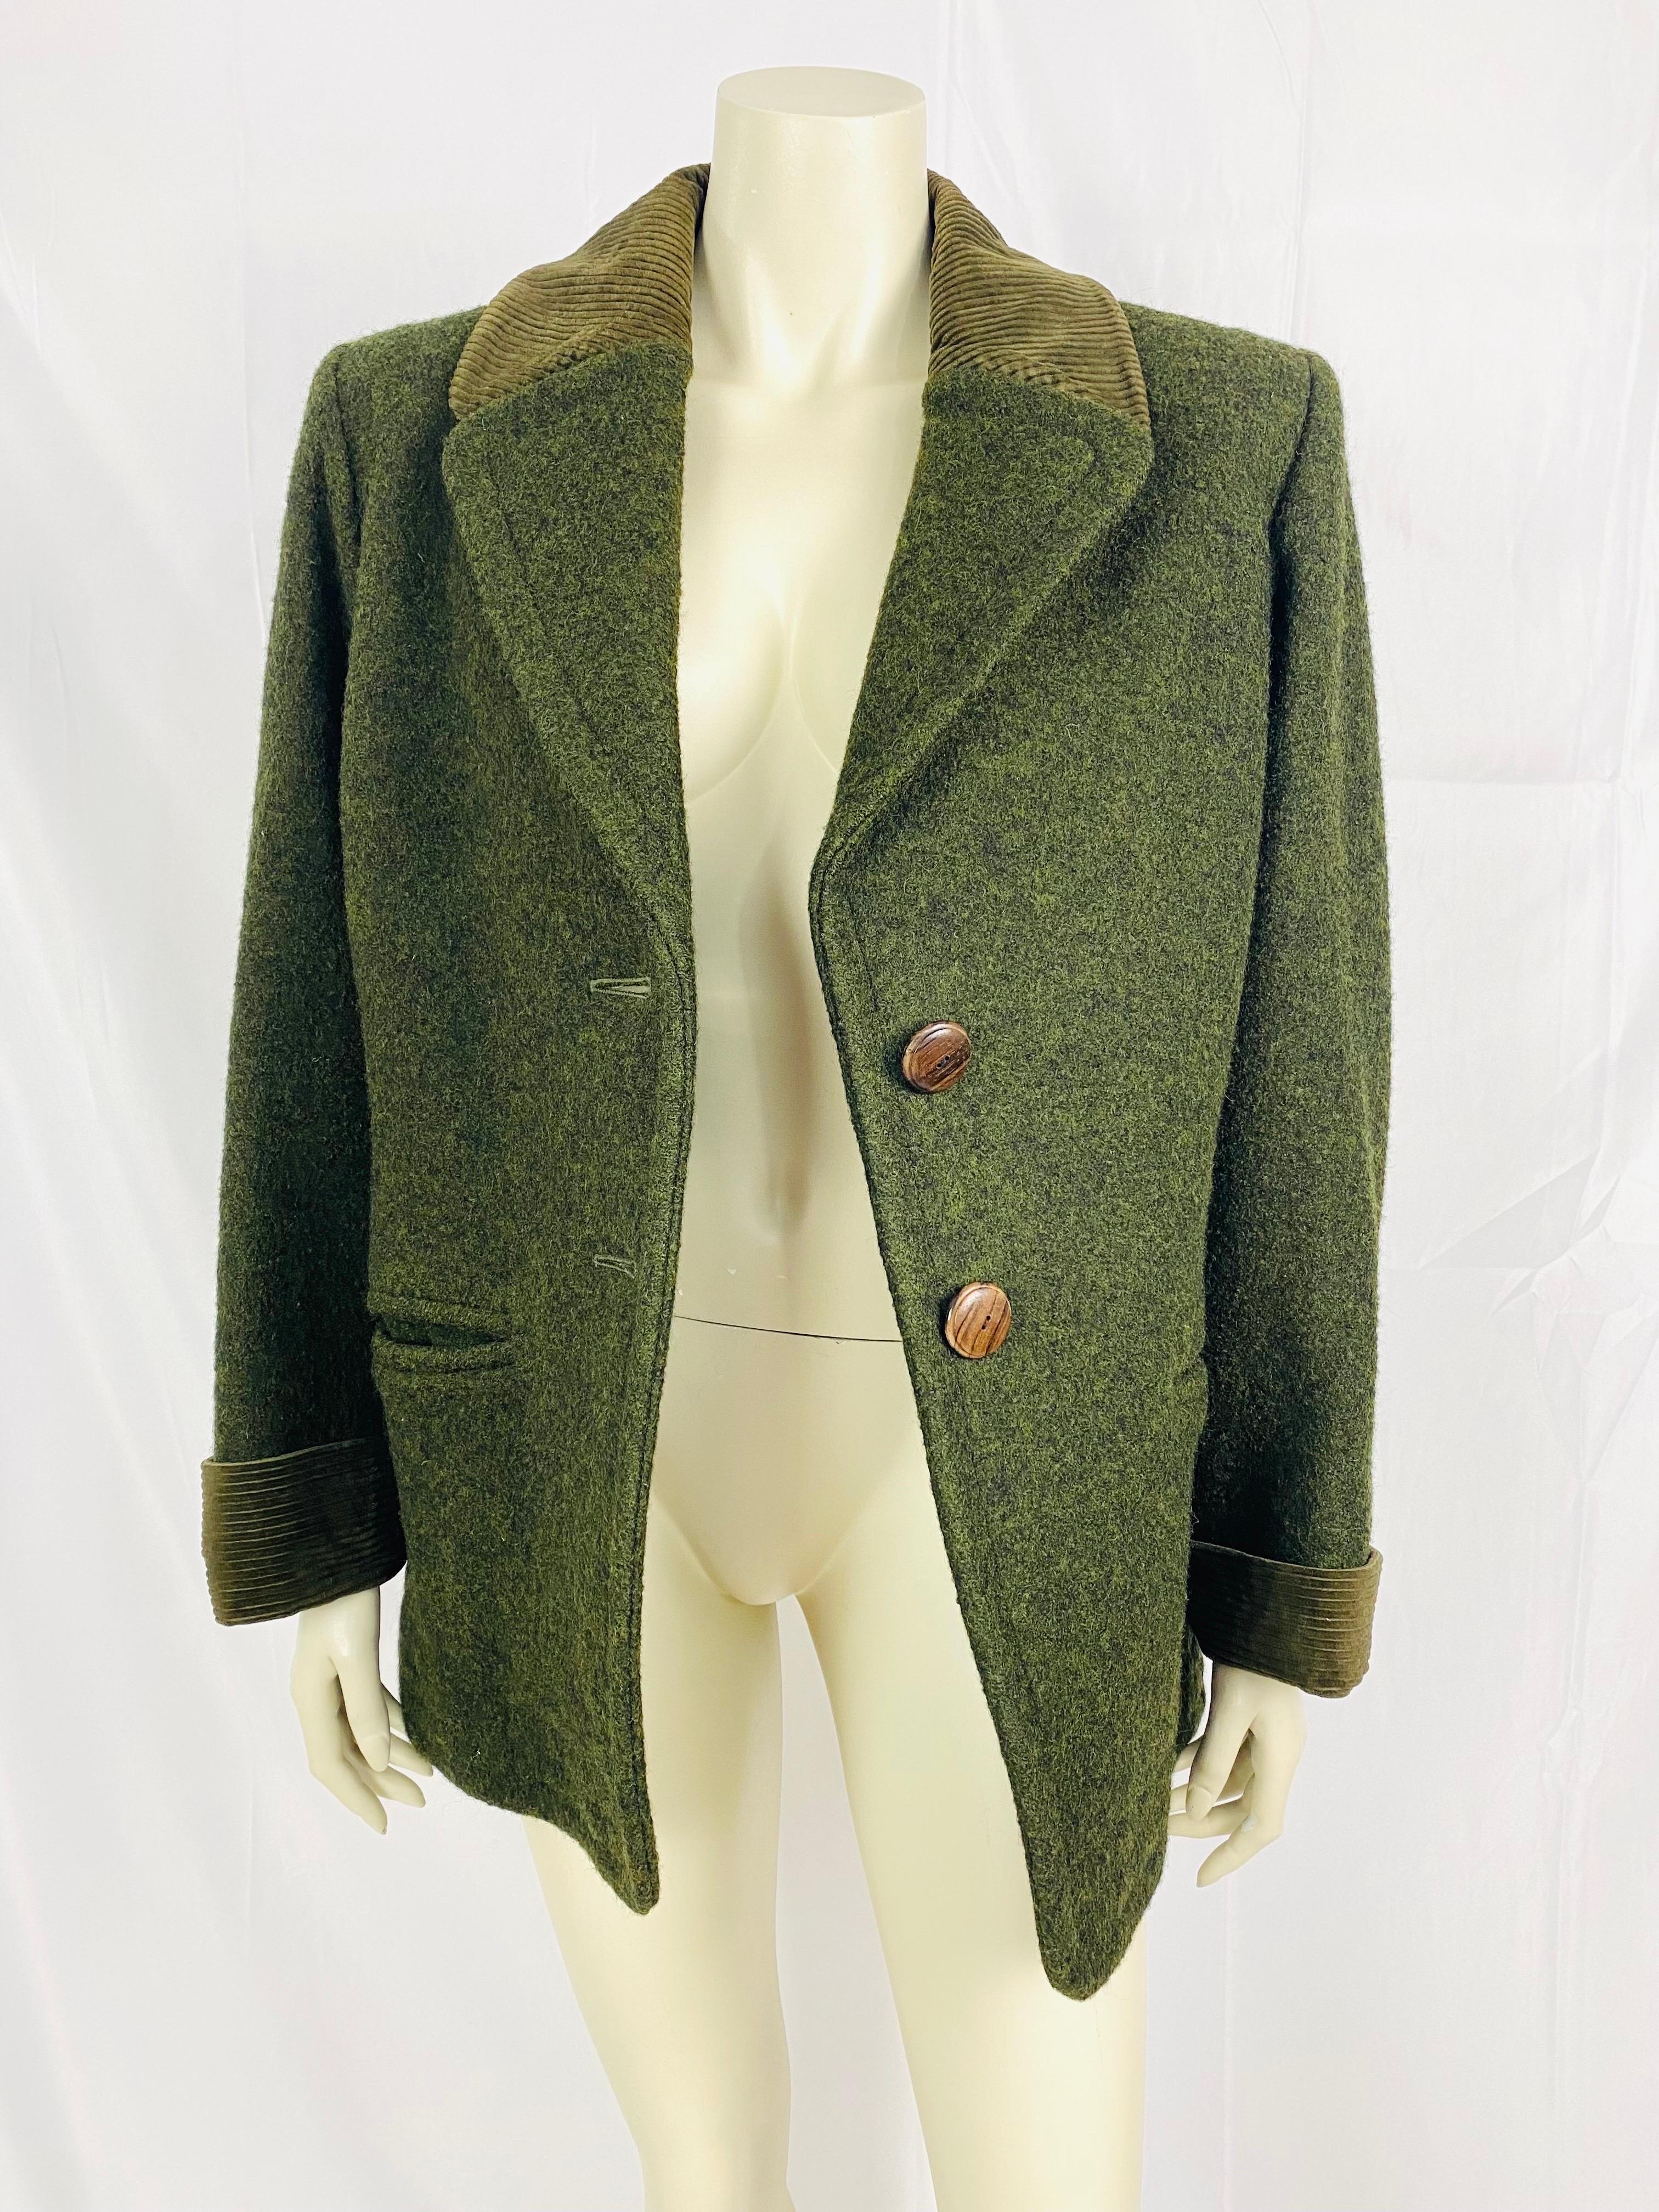 Superb vintage Yves saint laurent winter jacket circa 1970, in khaki boiled wool 3